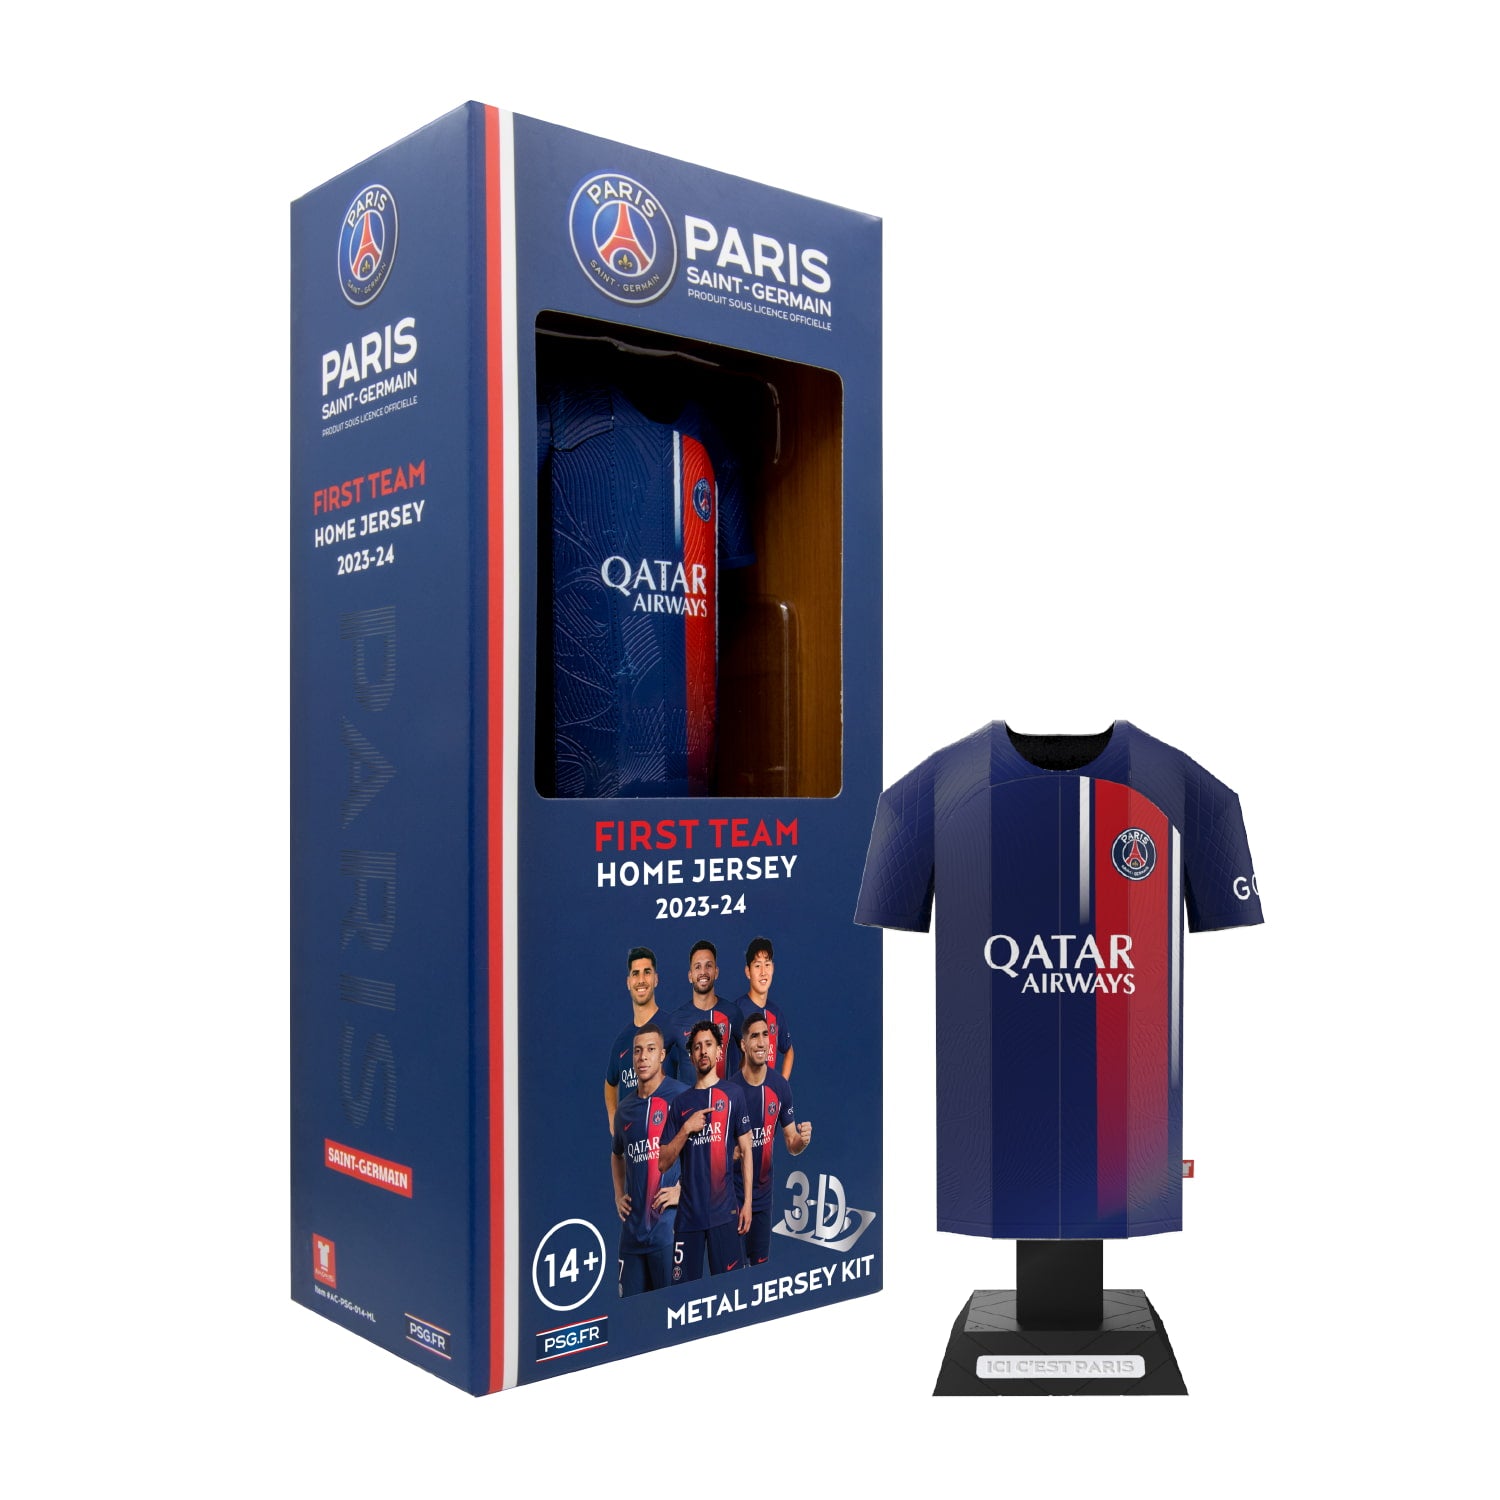 PSG home jersey locker pack in packaging